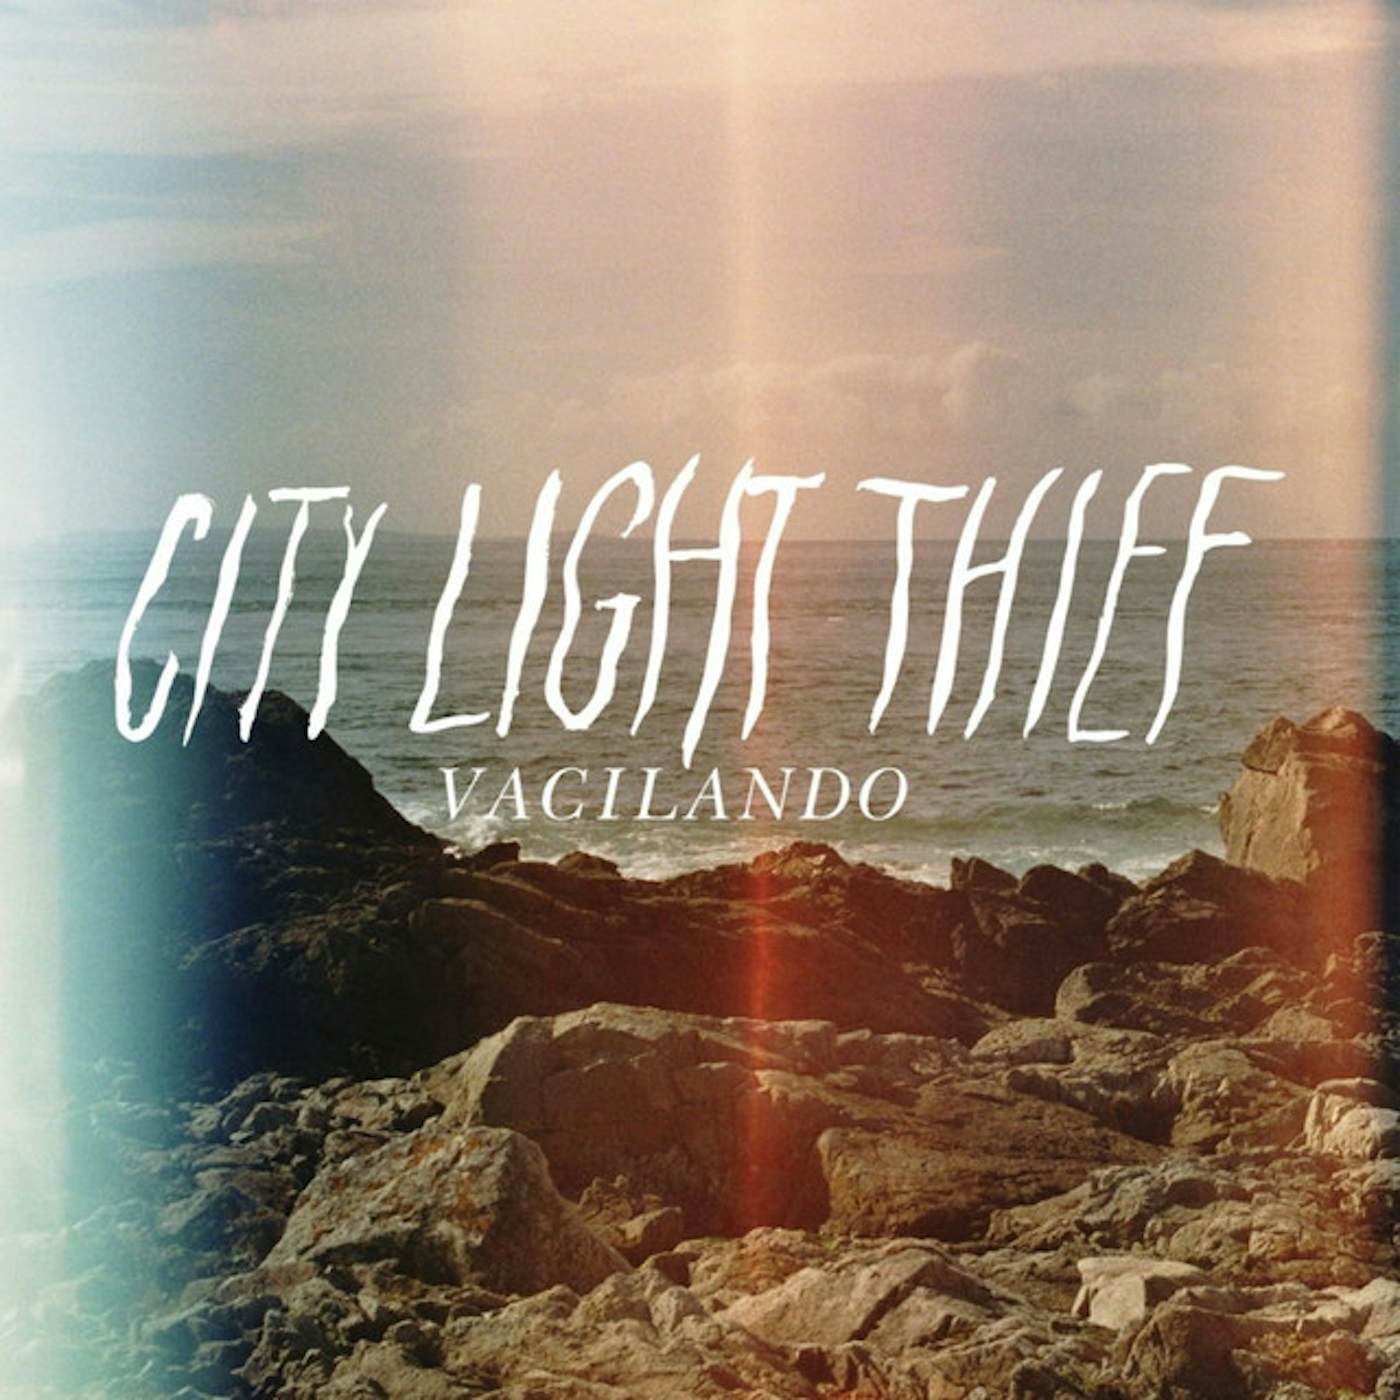 City Light Thief Vacilando Vinyl Record